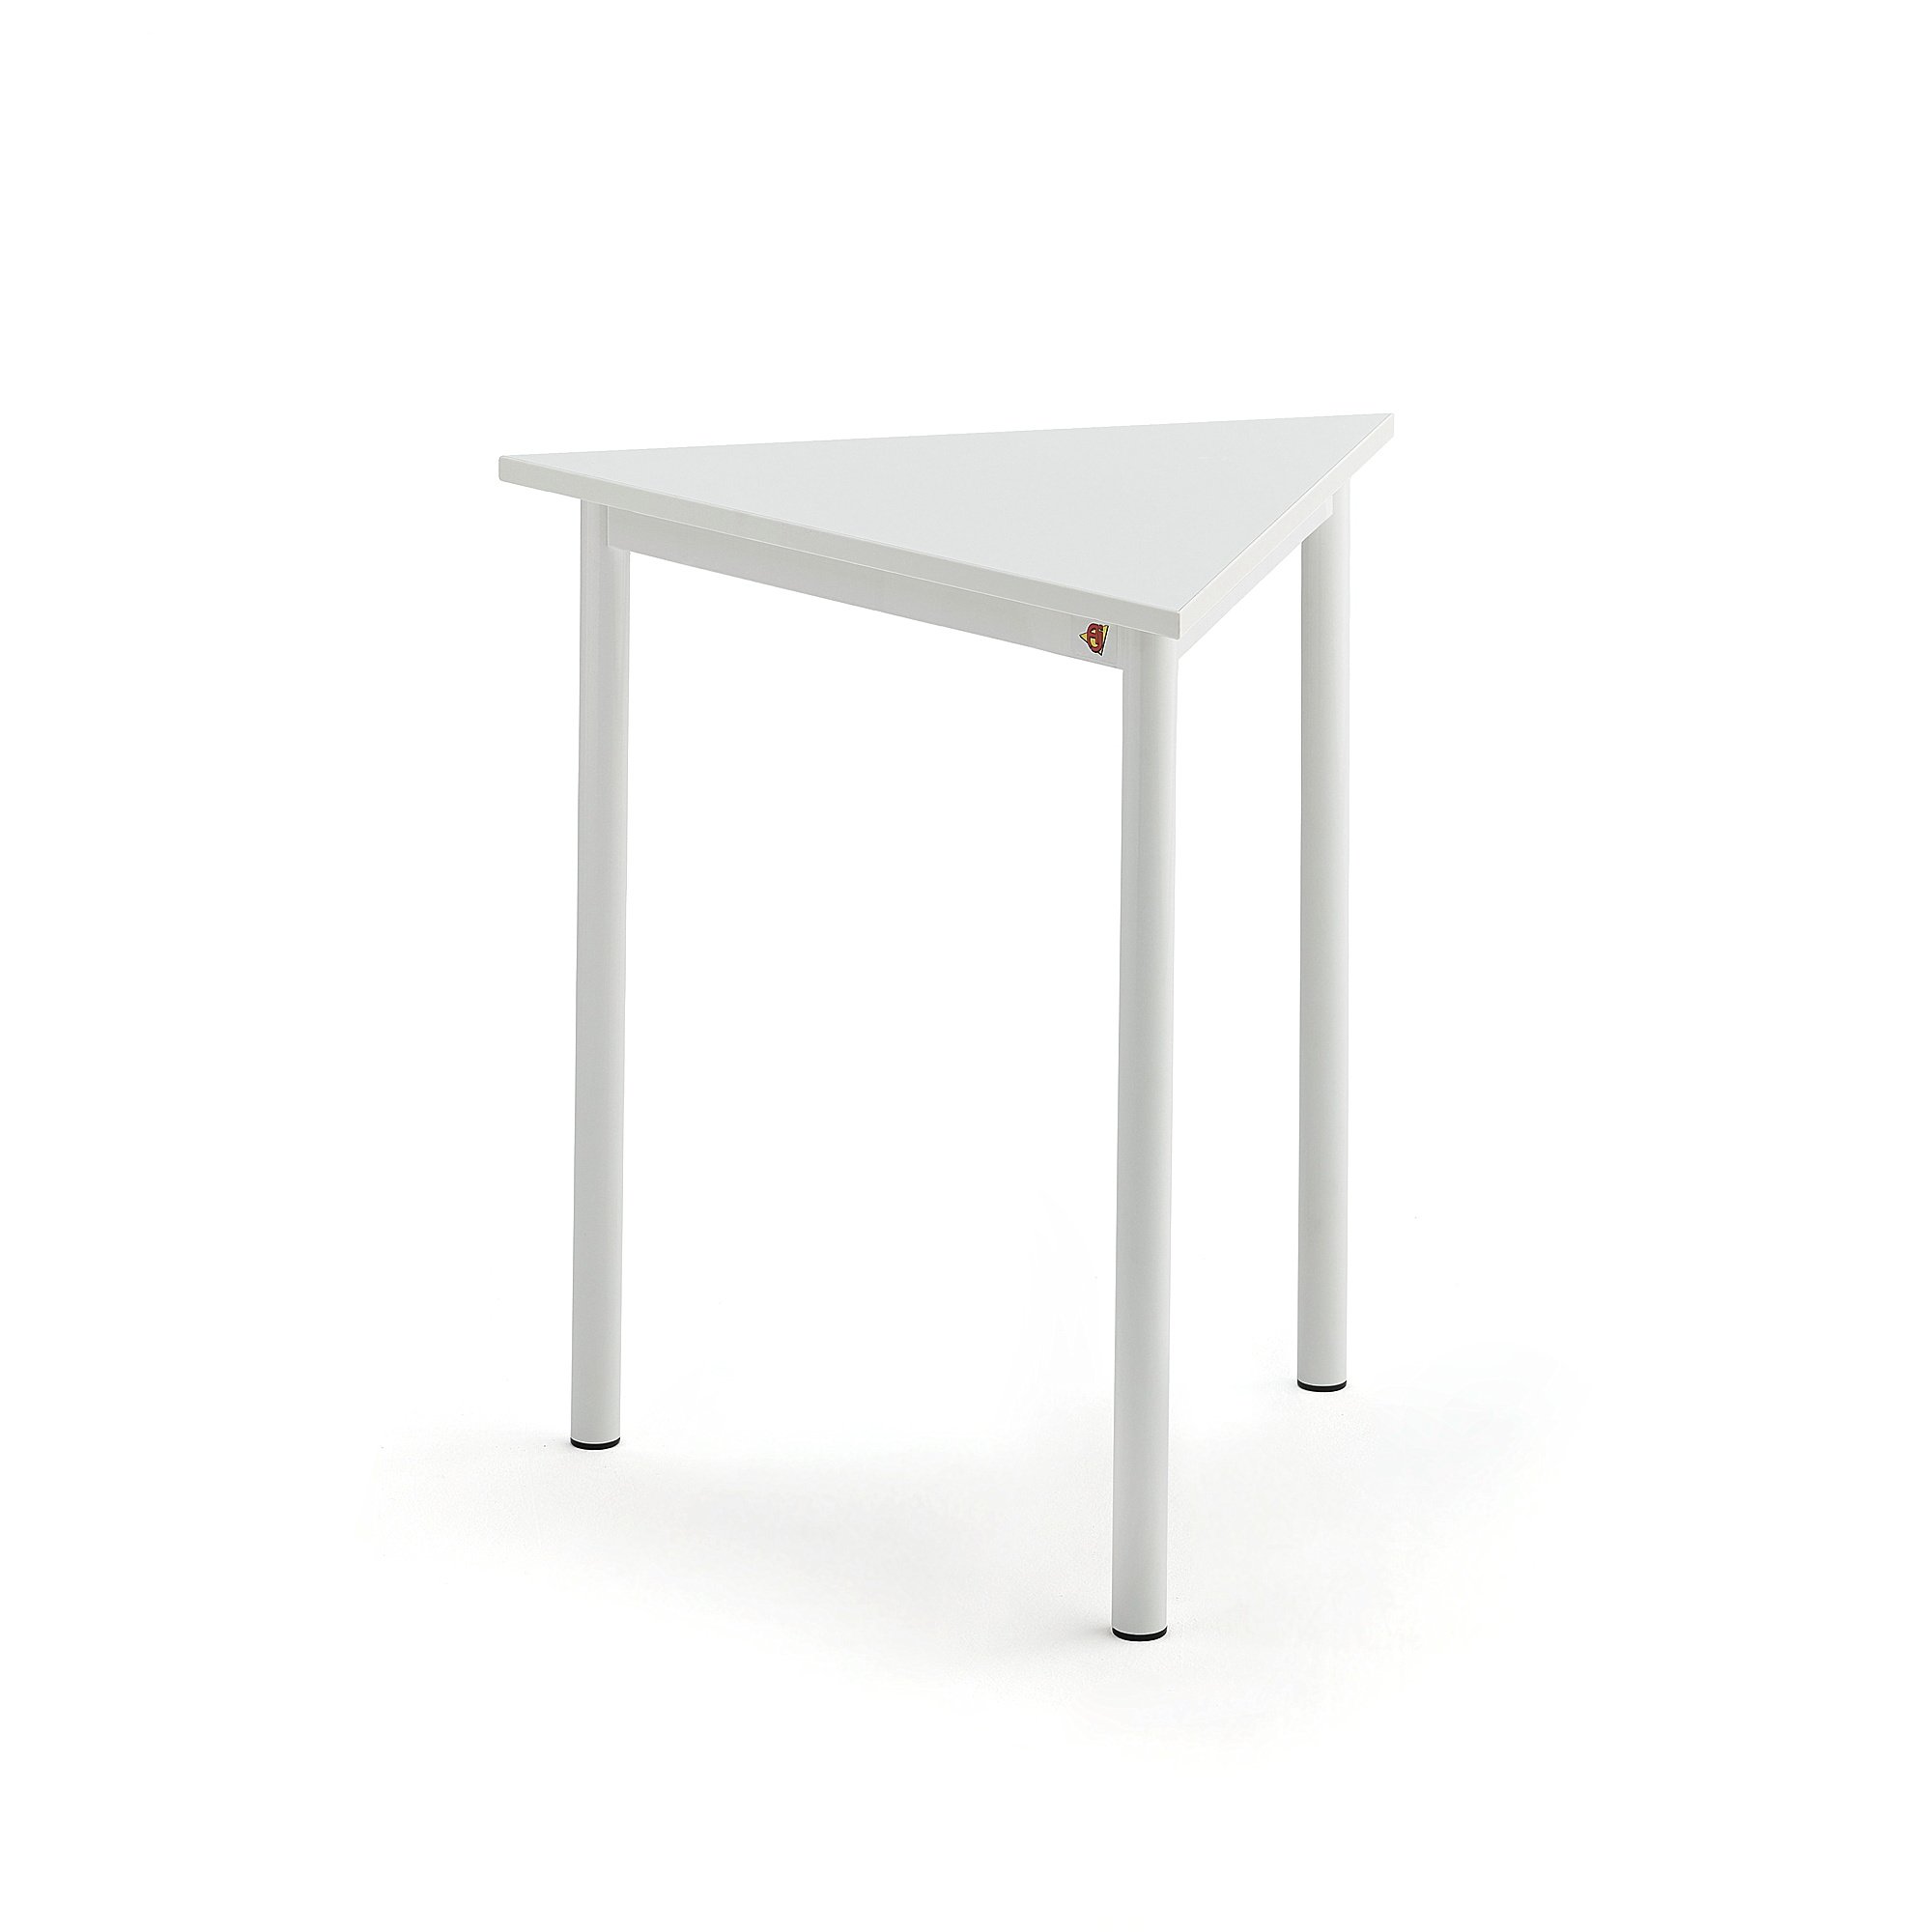 Stůl SONITUS TRIANGEL, 700x700x720 mm, bílé nohy, HPL deska tlumící hluk, bílá